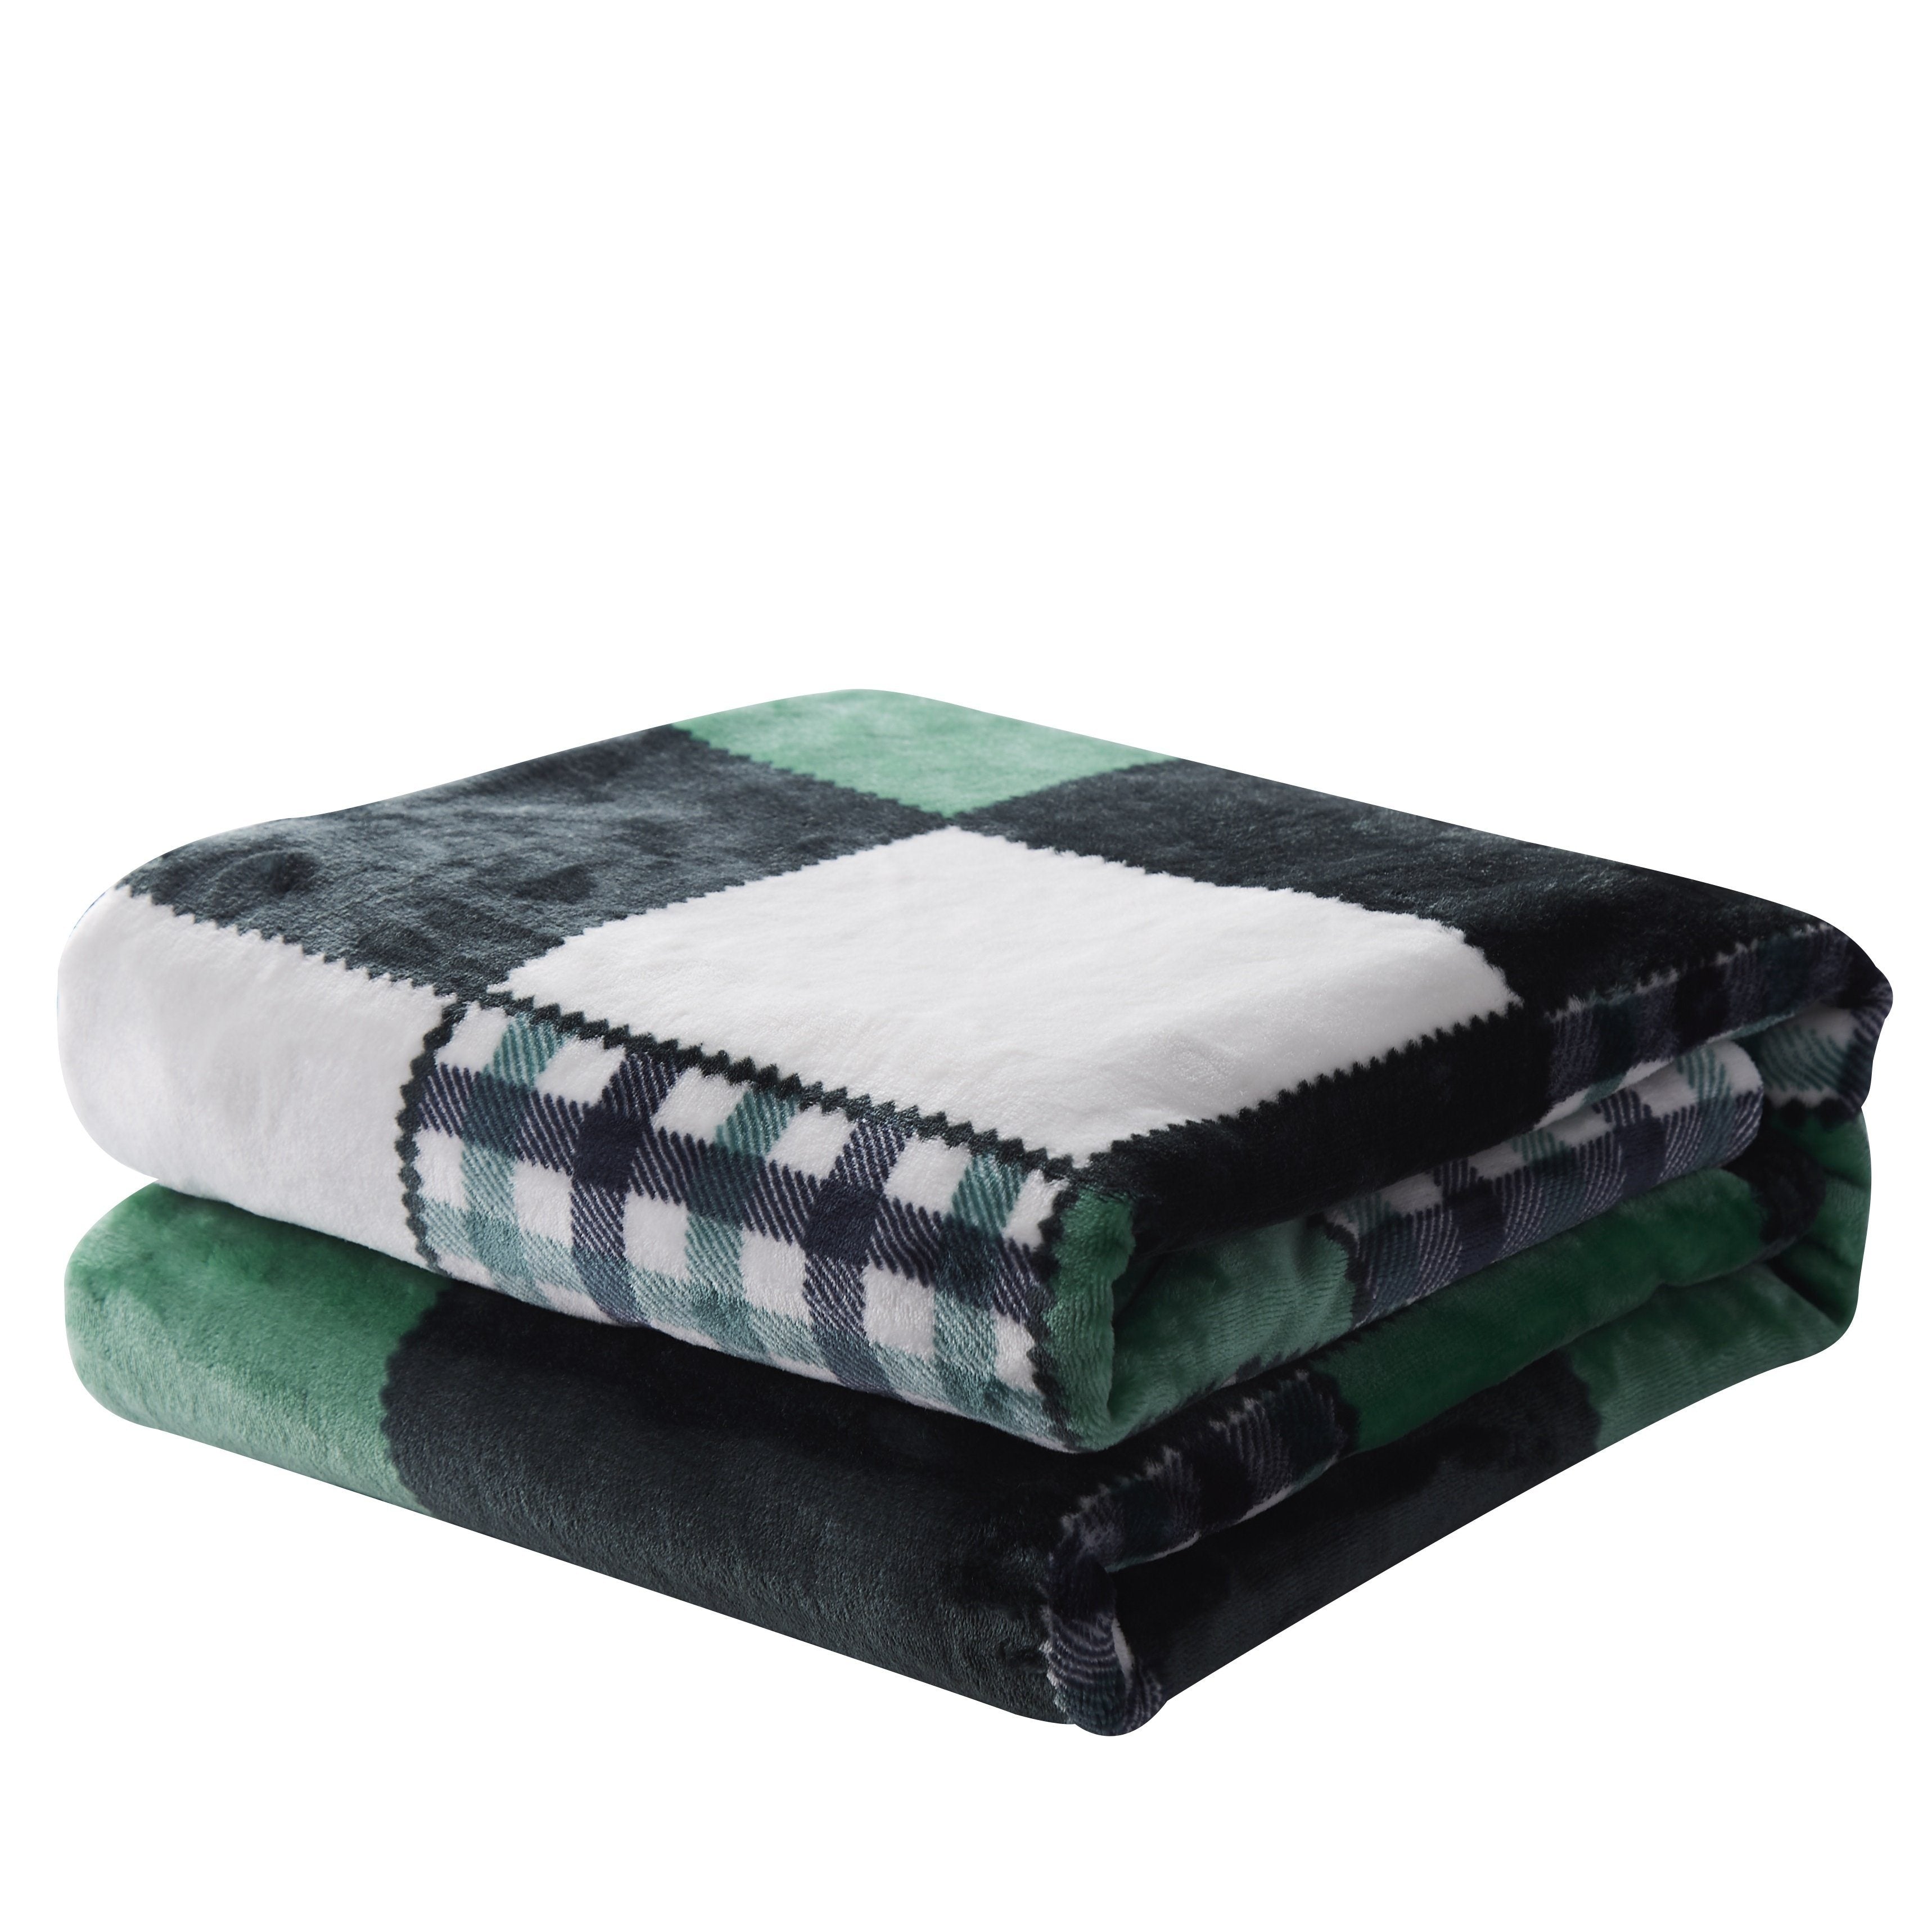 Tache Forest Green Plaid Flannel Throw Blanket (4023) - Tache Home Fashion